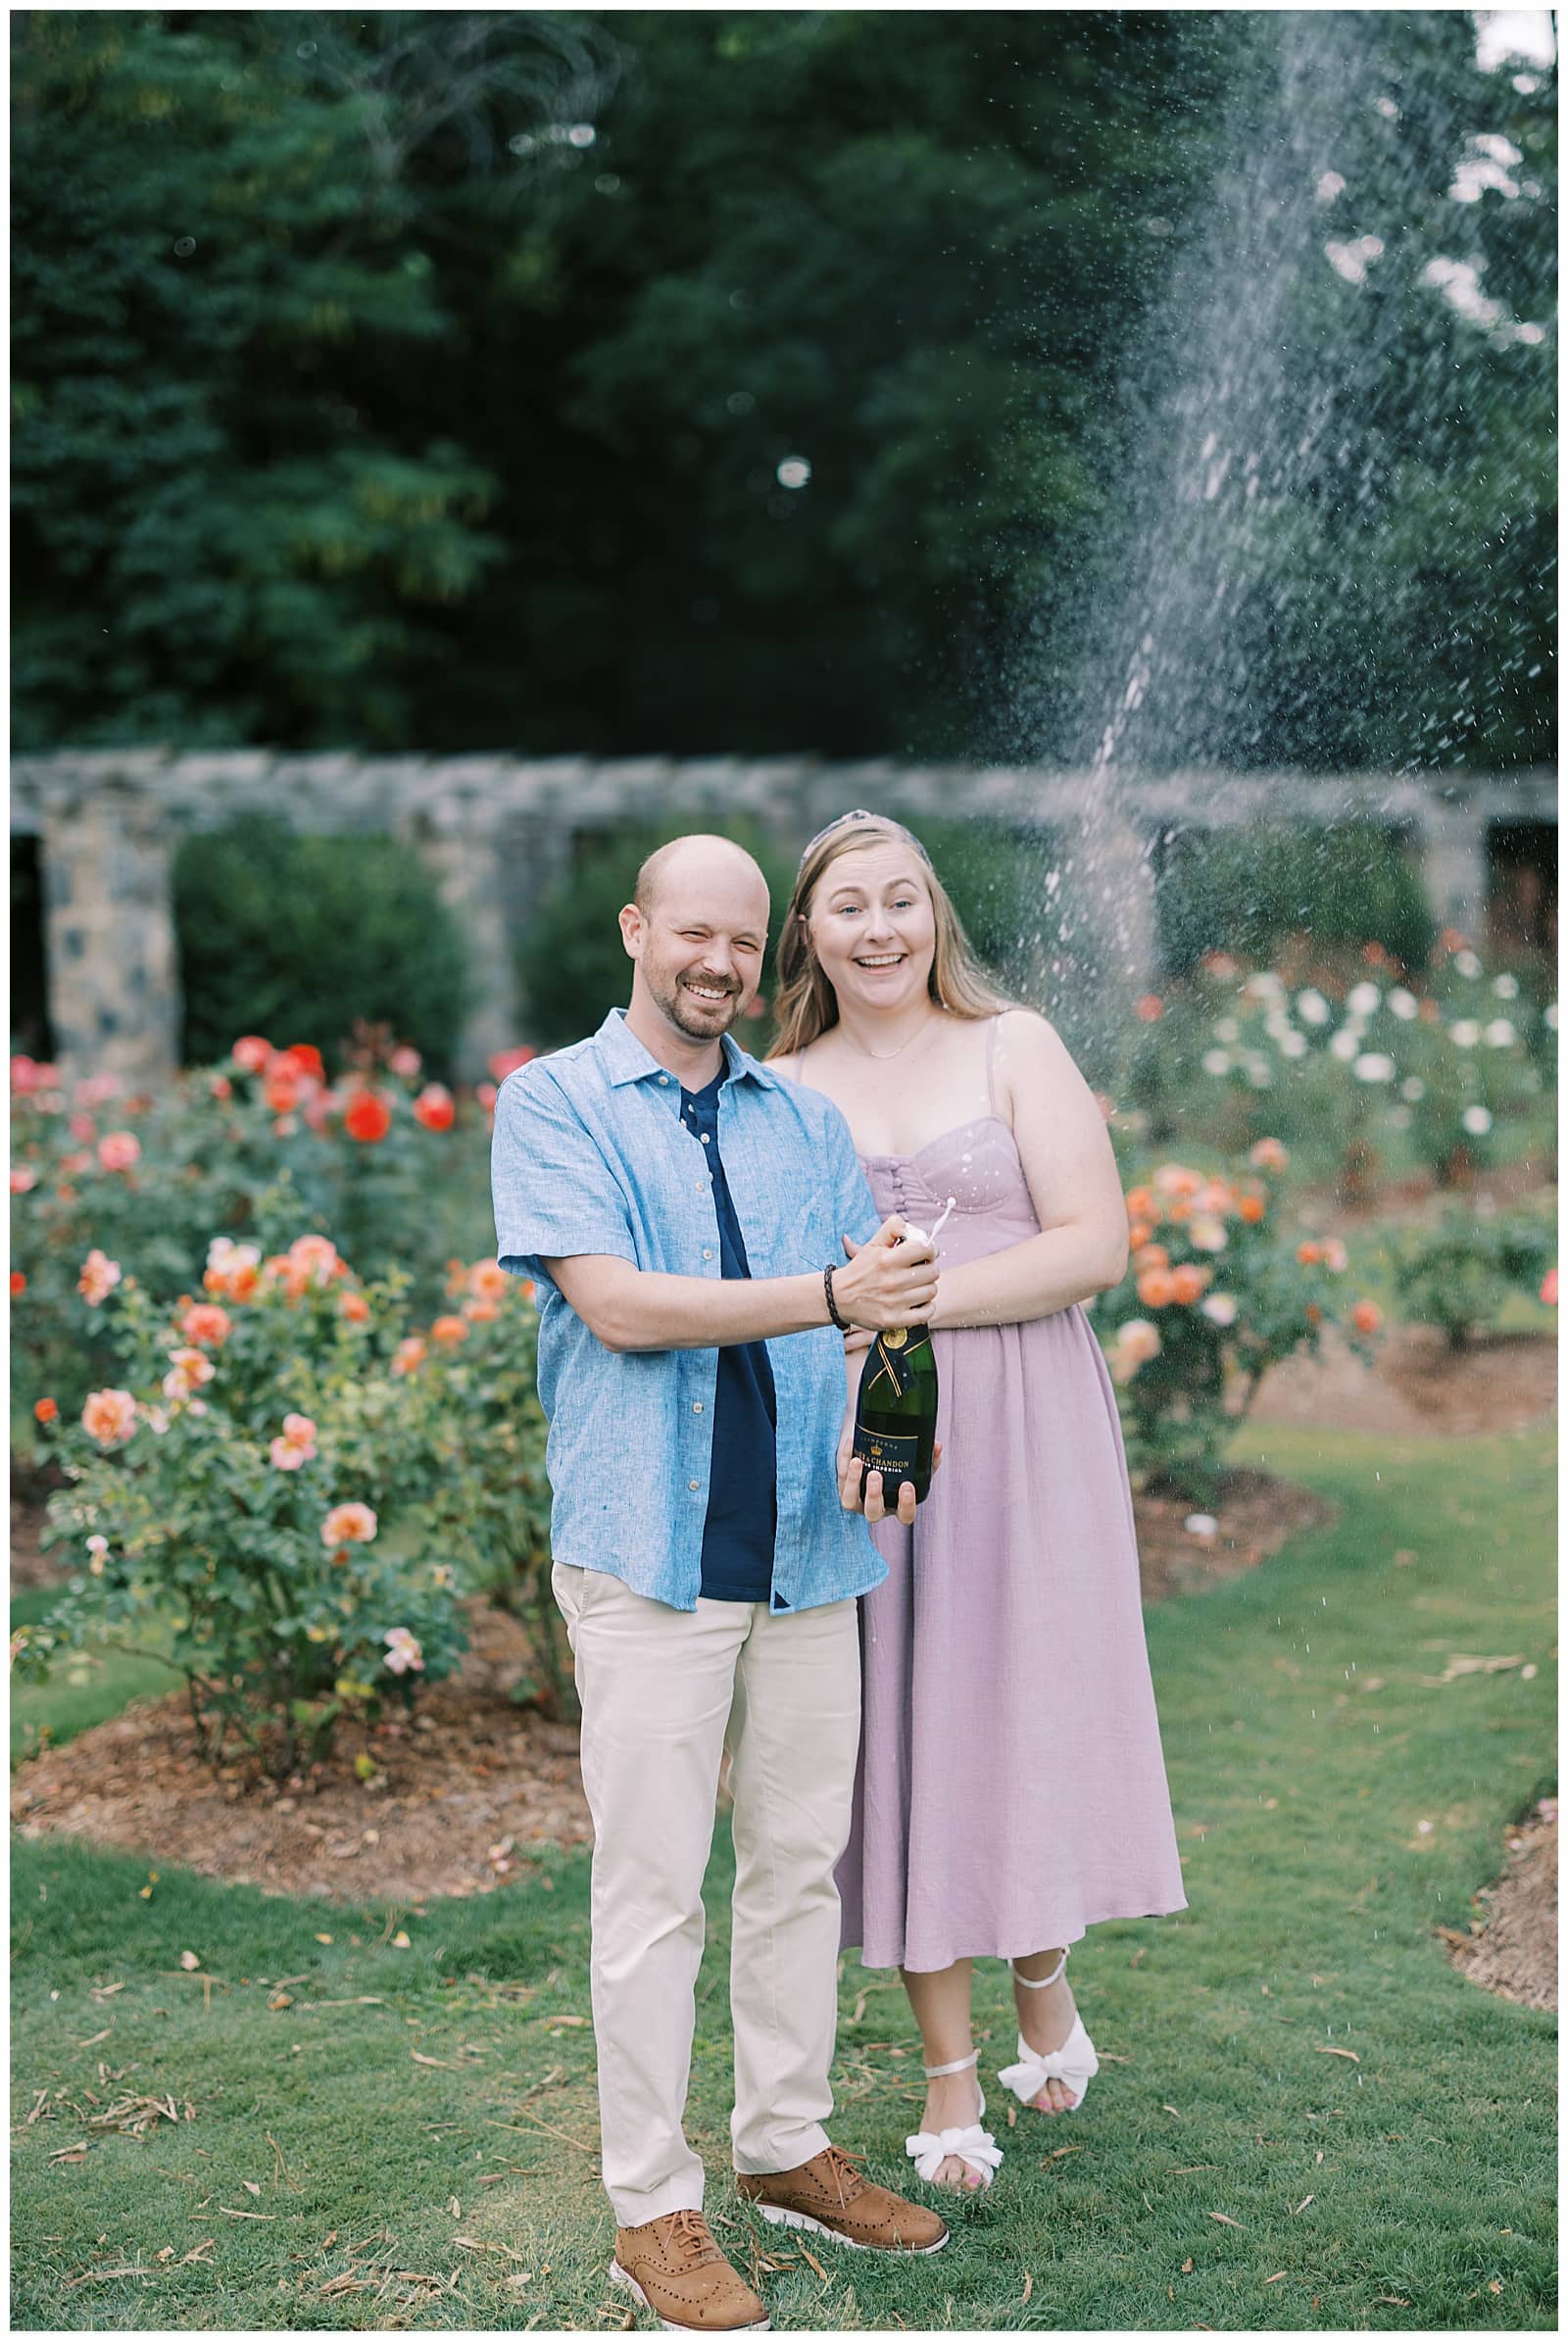 Danielle-Defayette-Photography-Raleigh-Rose-Garden-Engagement-Photos_0020.jpg